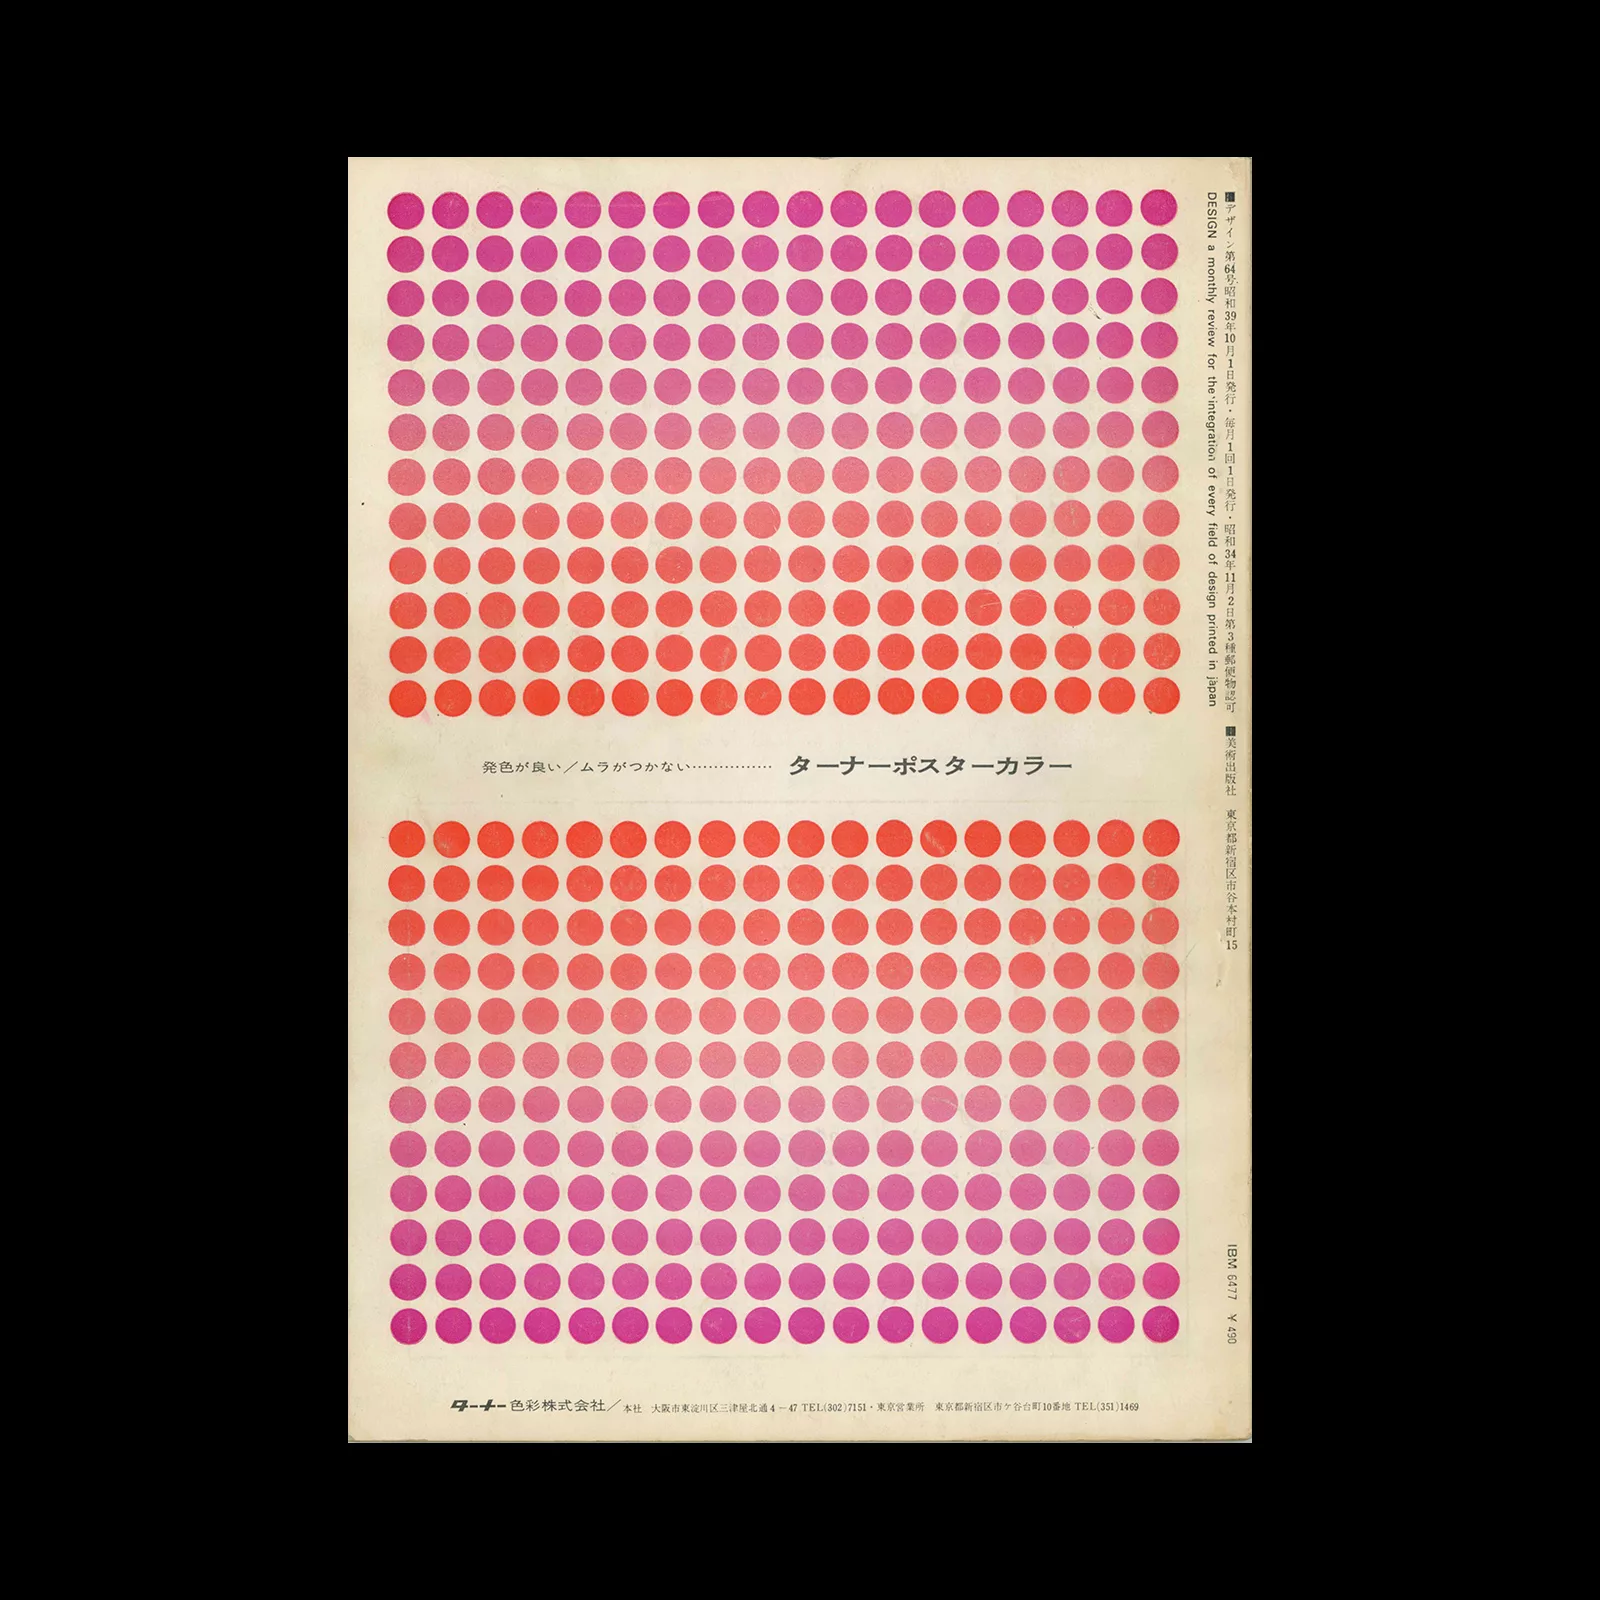 Design (Japan), 64, 1964. Cover design by Kohei Sugiura